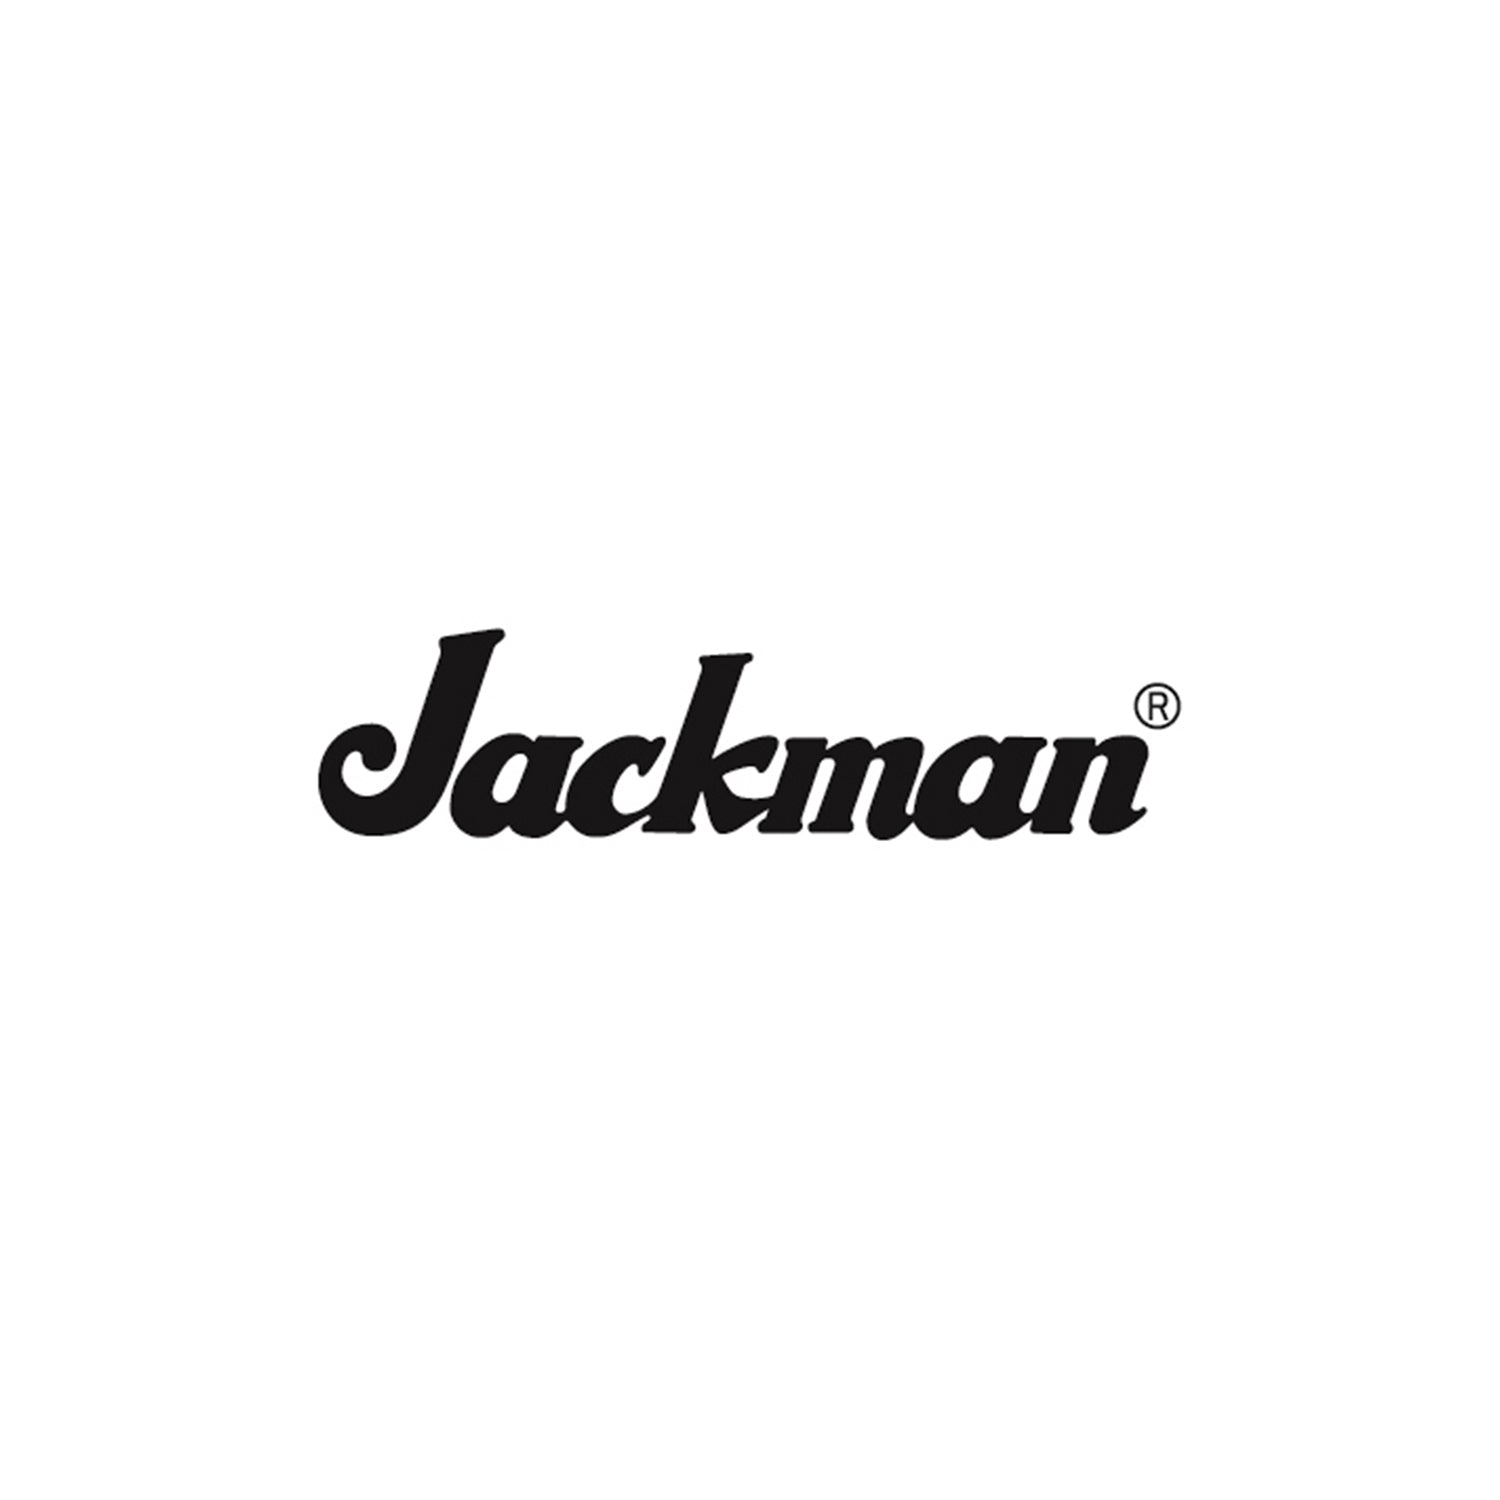 Jack man